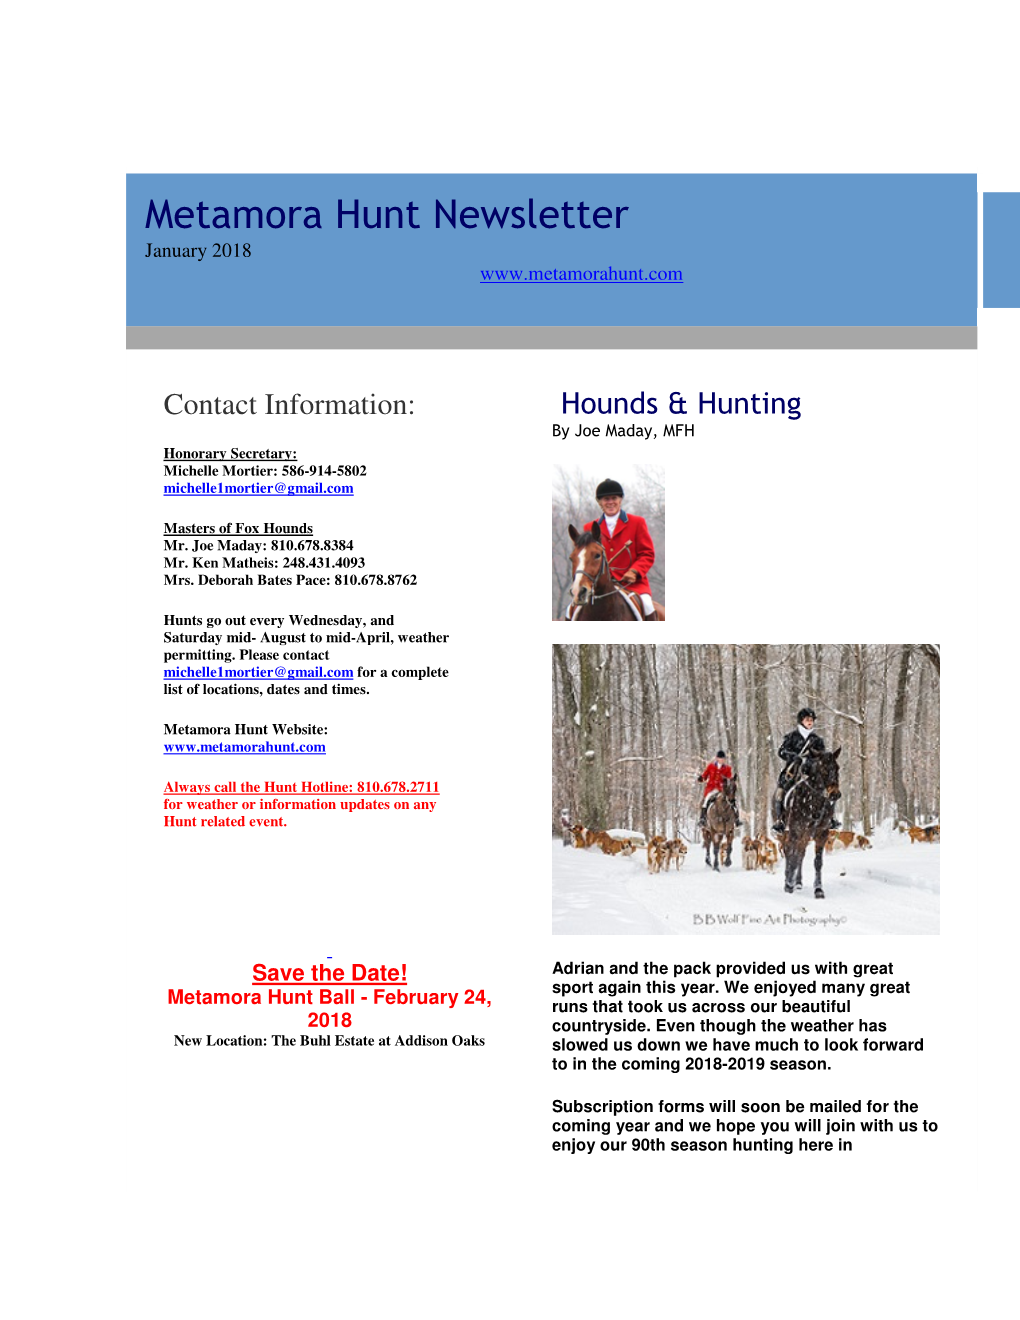 Metamora Hunt Newsletter January 2018